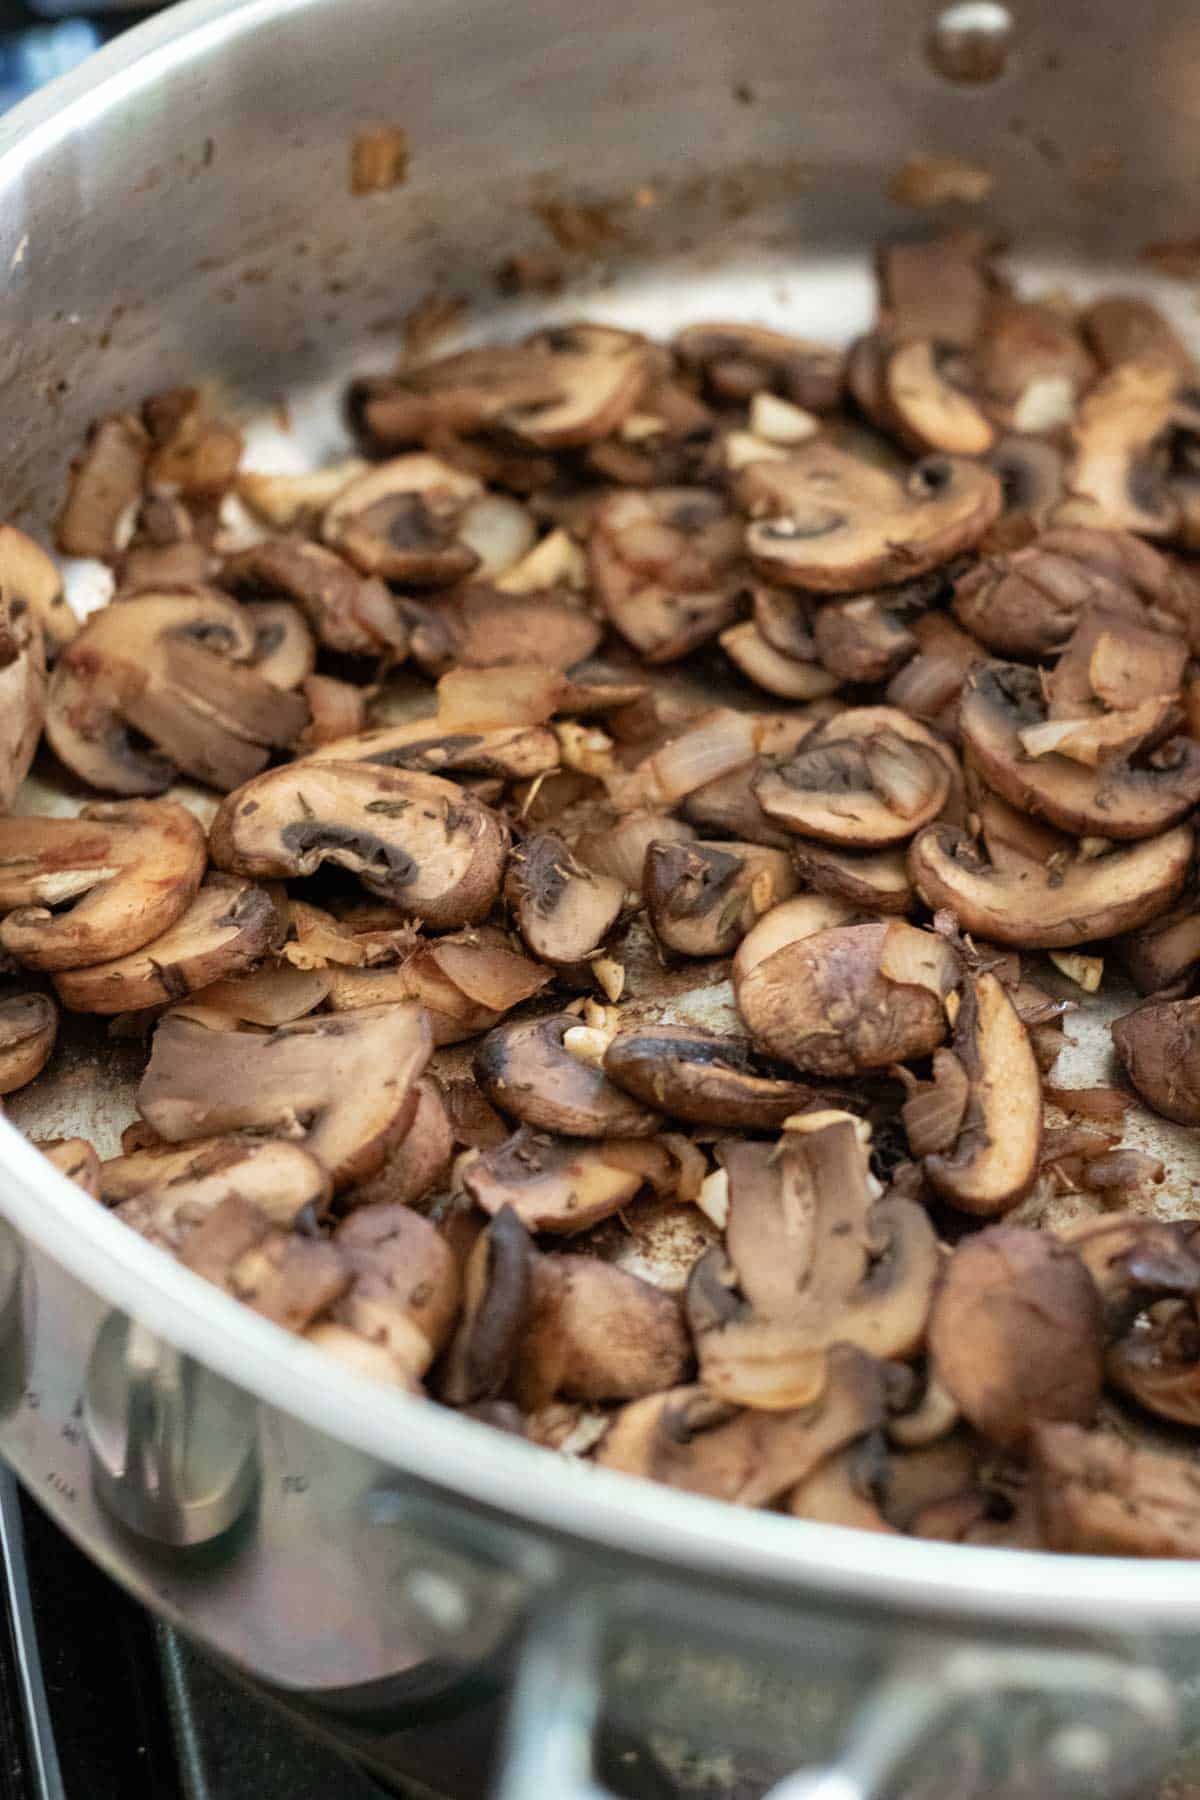 Sauteing mushrooms until dry.